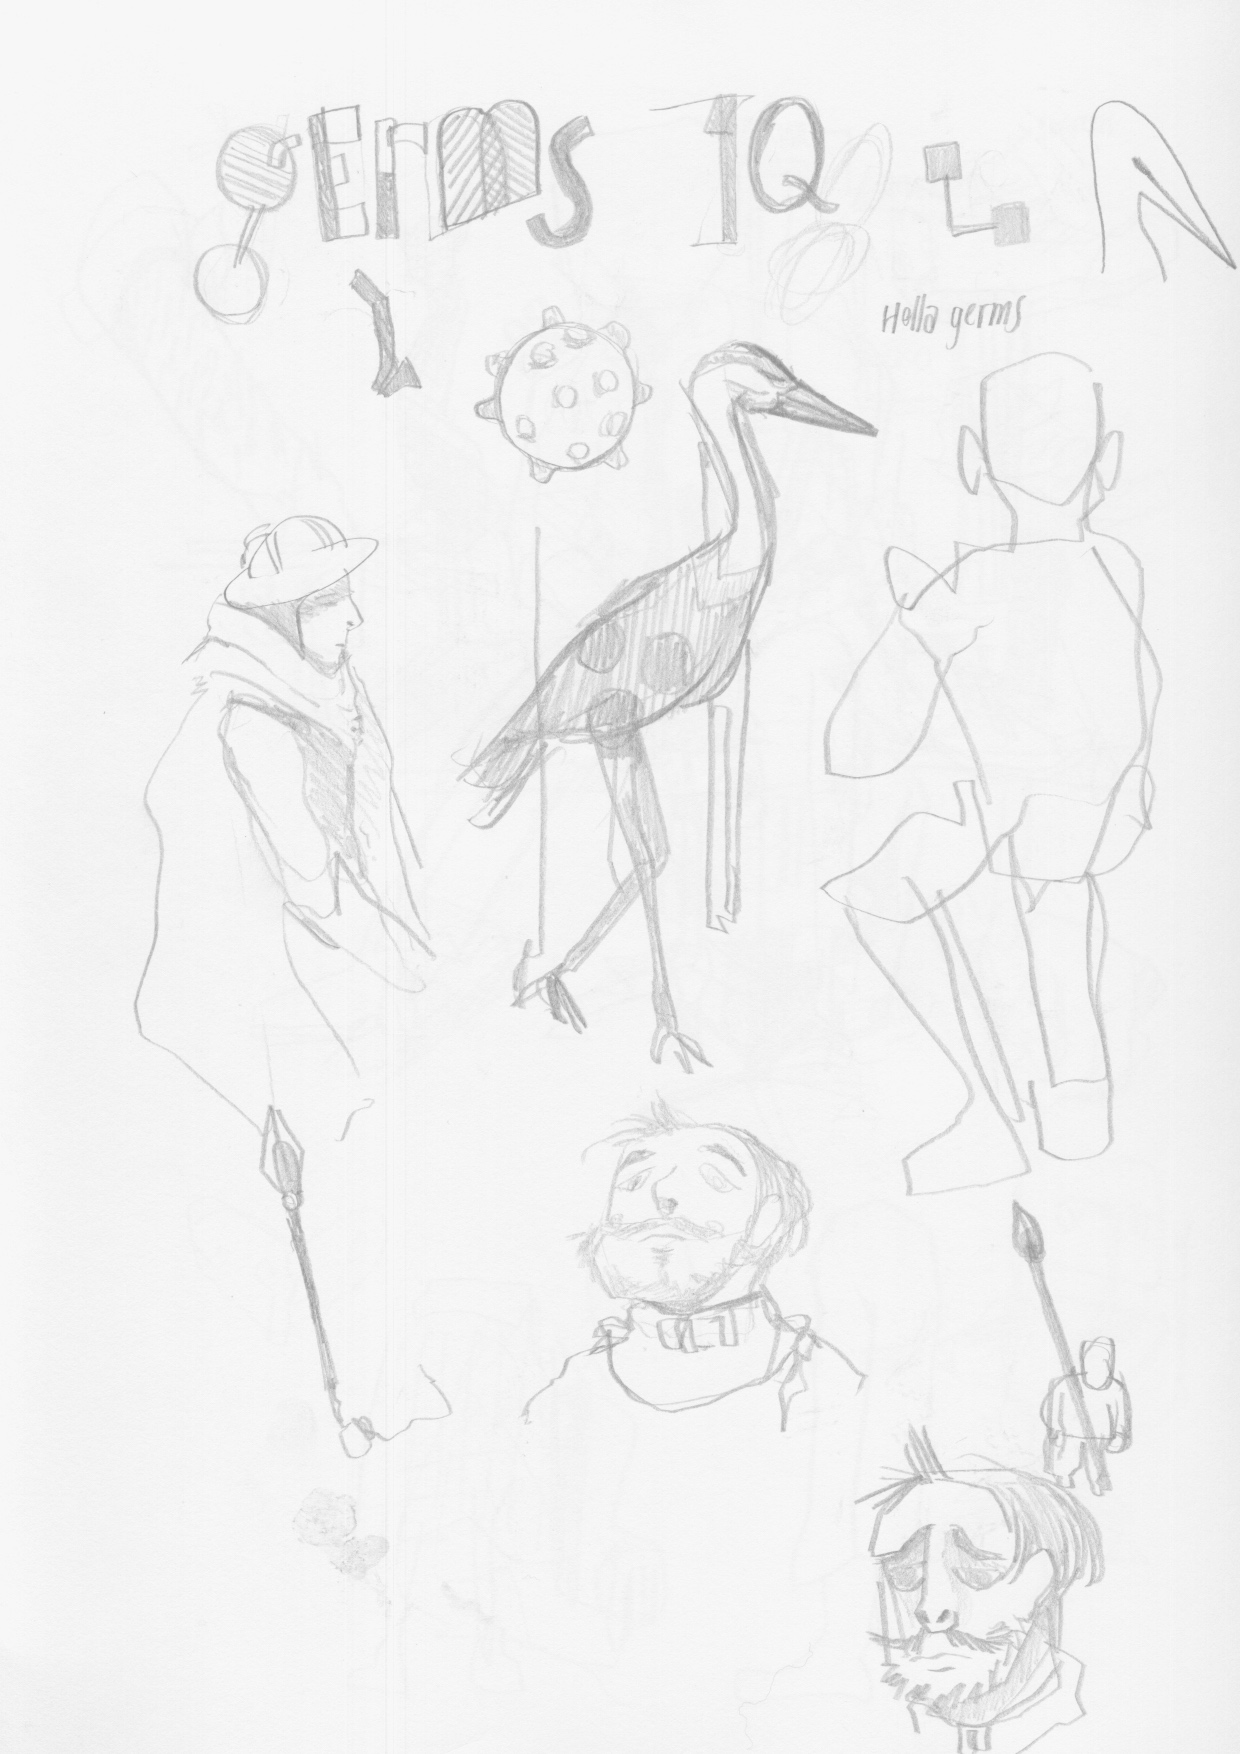 Sketchbook page 186